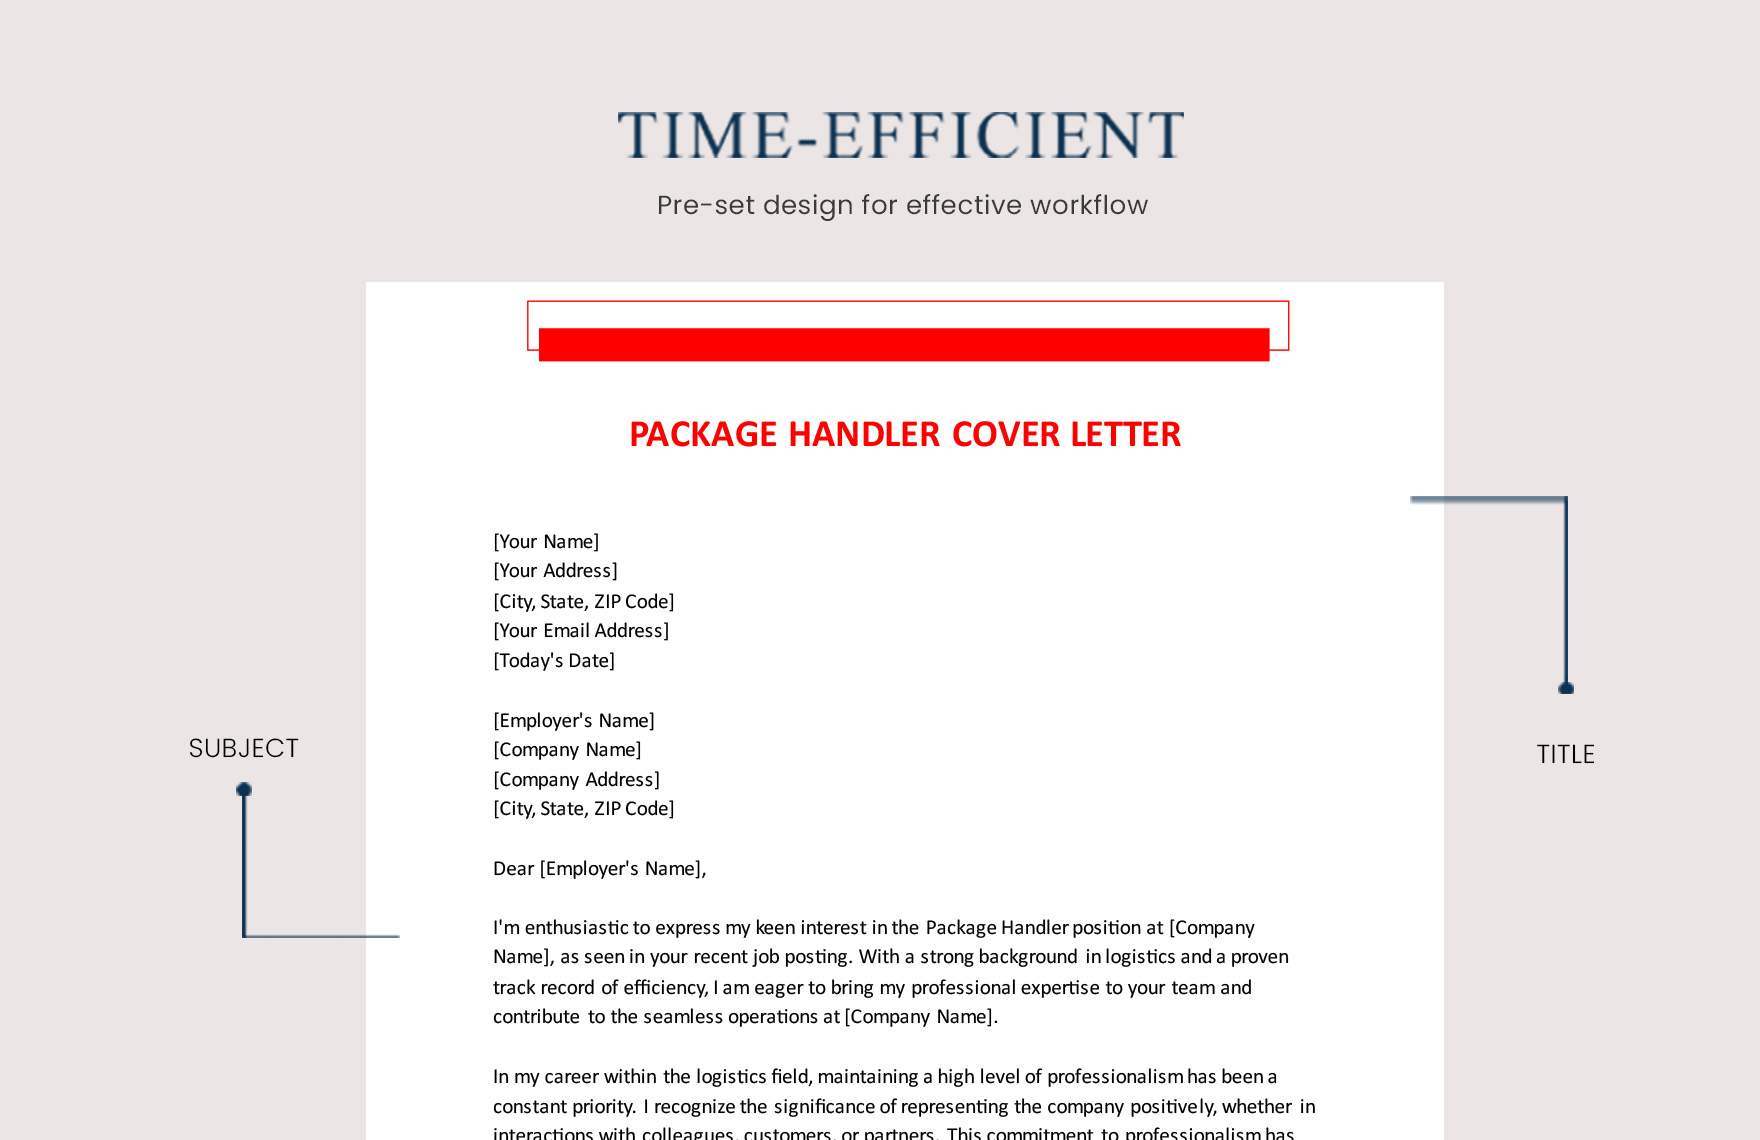 Package Handler Cover Letter